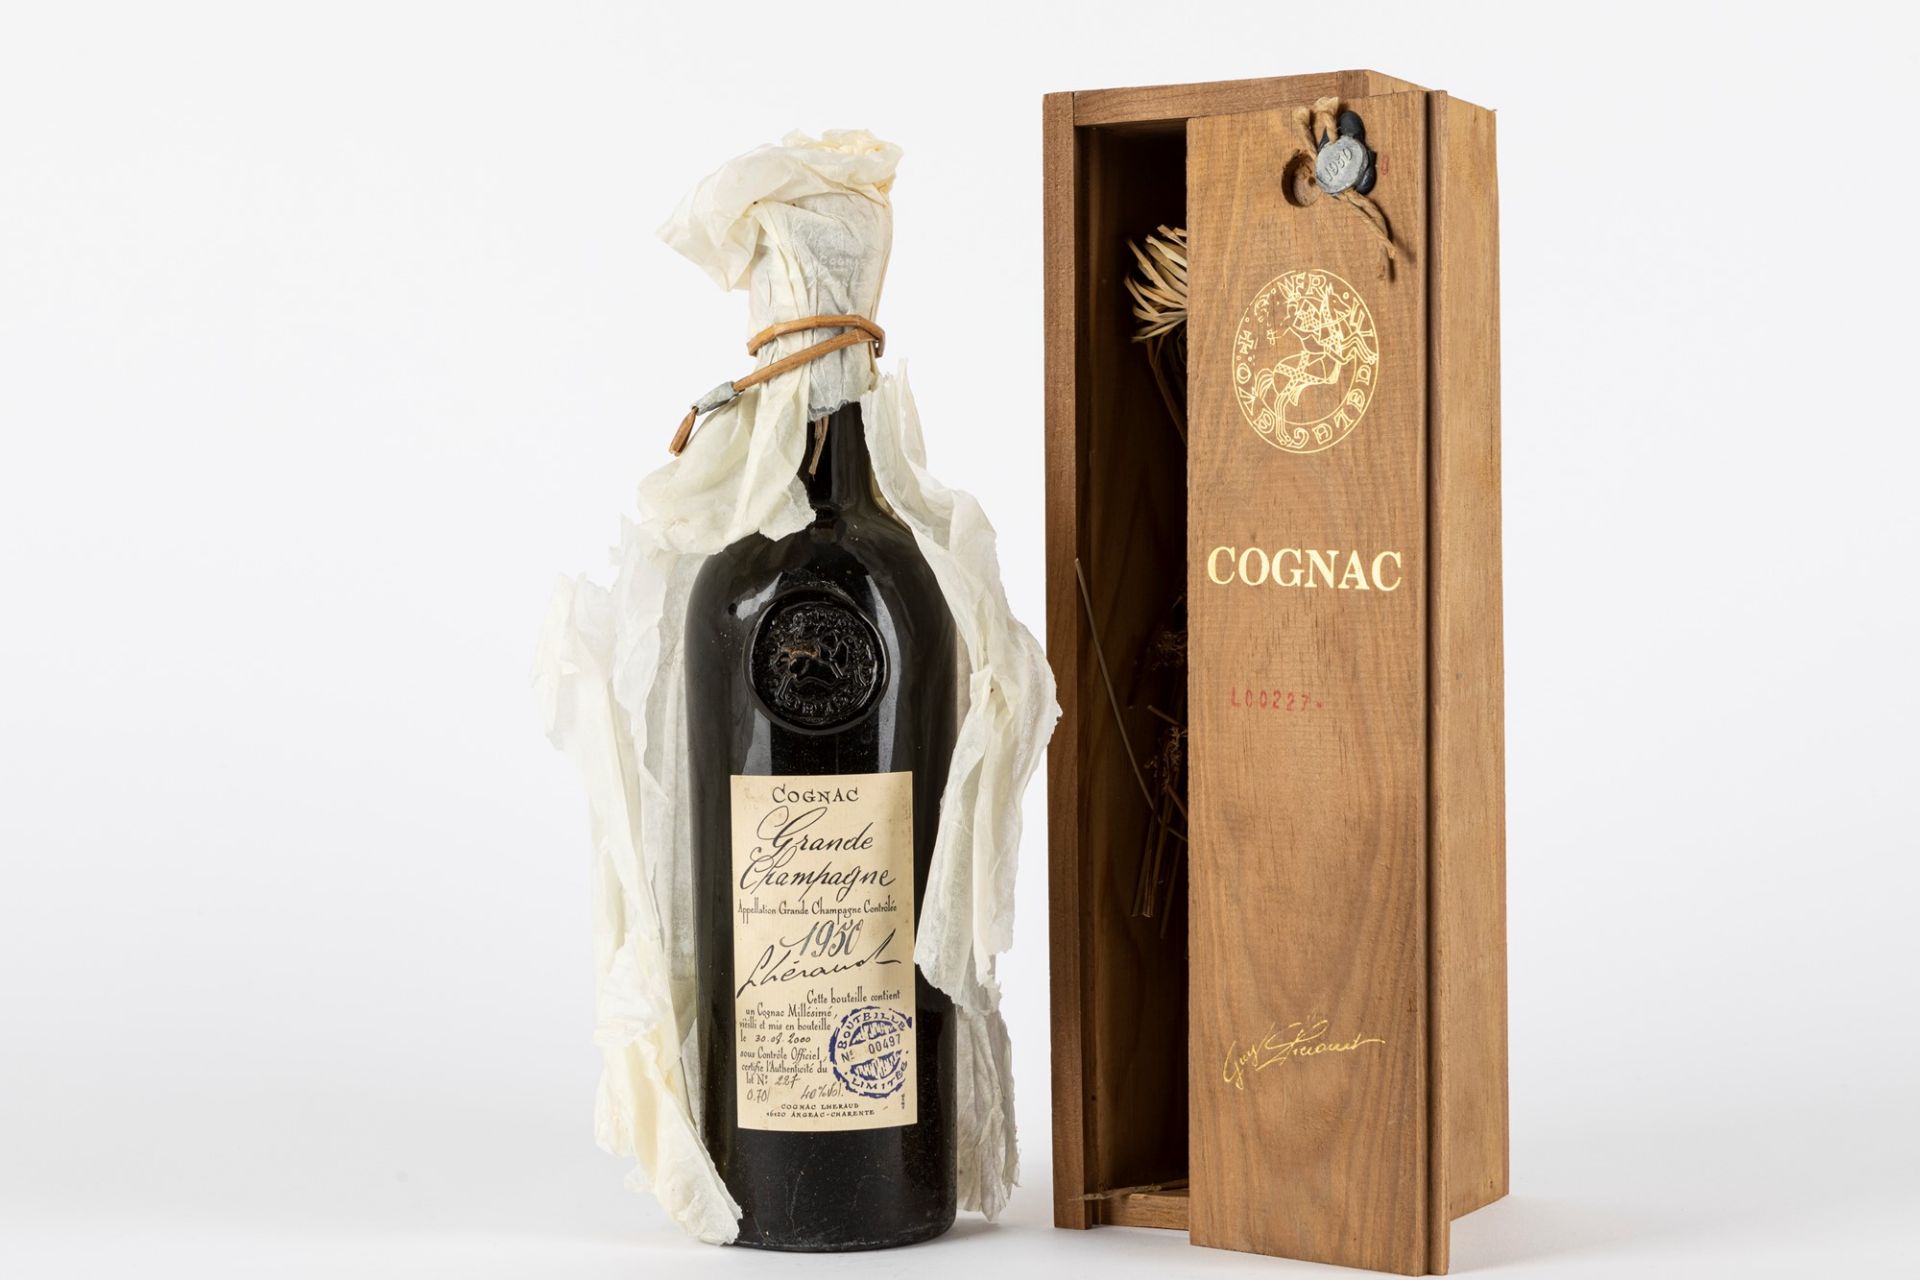 France - Cognac / Lheraud 1950 Grande Champagne Cognac (Bottled 2000) 1950